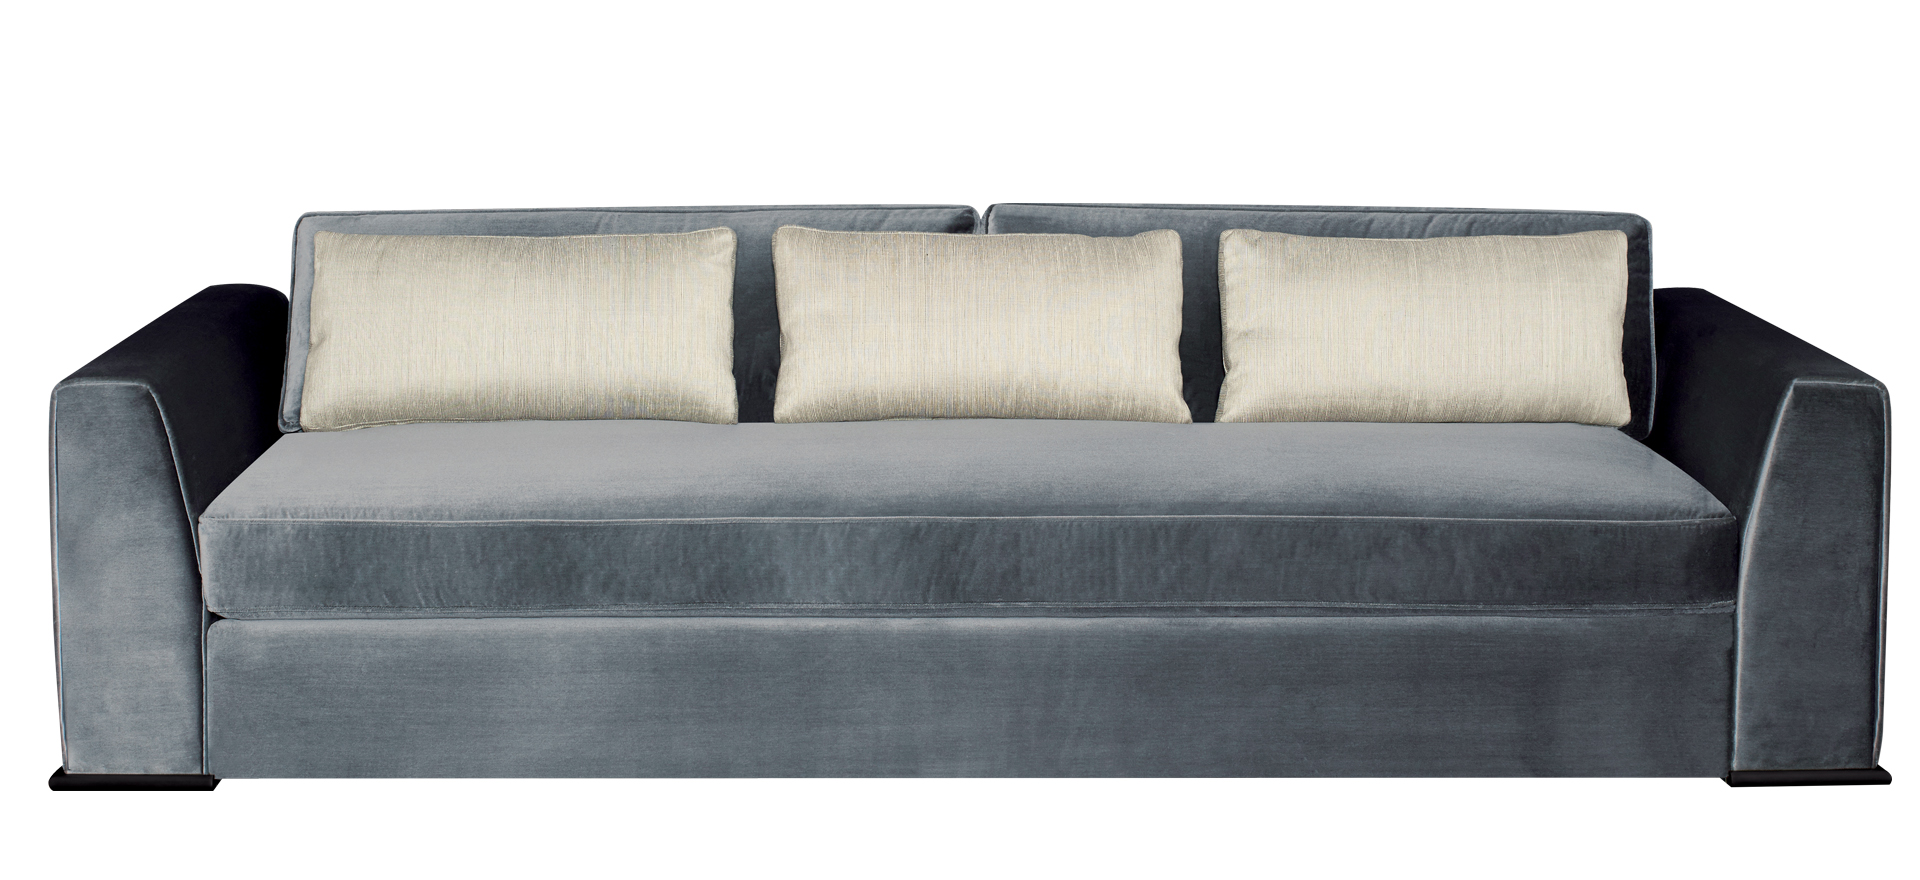 Ulderico is a wooden sofa covered in fabric from Promemoria's catalogue | Promemoria